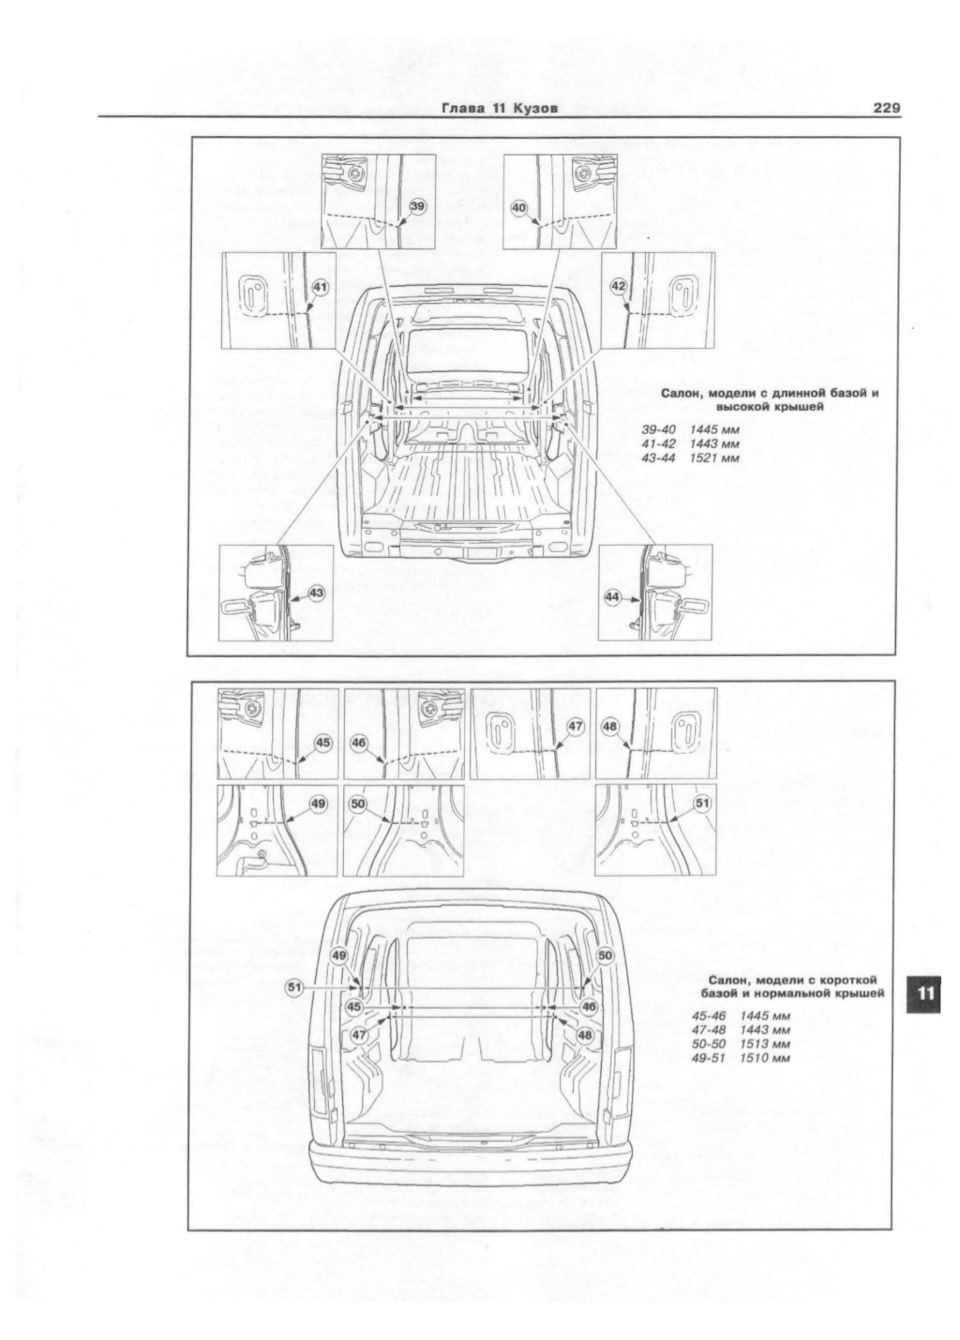 Размер форд коннект. Ford Tourneo connect габариты багажника. Ford Transit connect 1.8 МТ Размеры кузова. Форд Транзит Коннект Размеры кузова. Размер кузова Форд Транзит Коннект 2008.